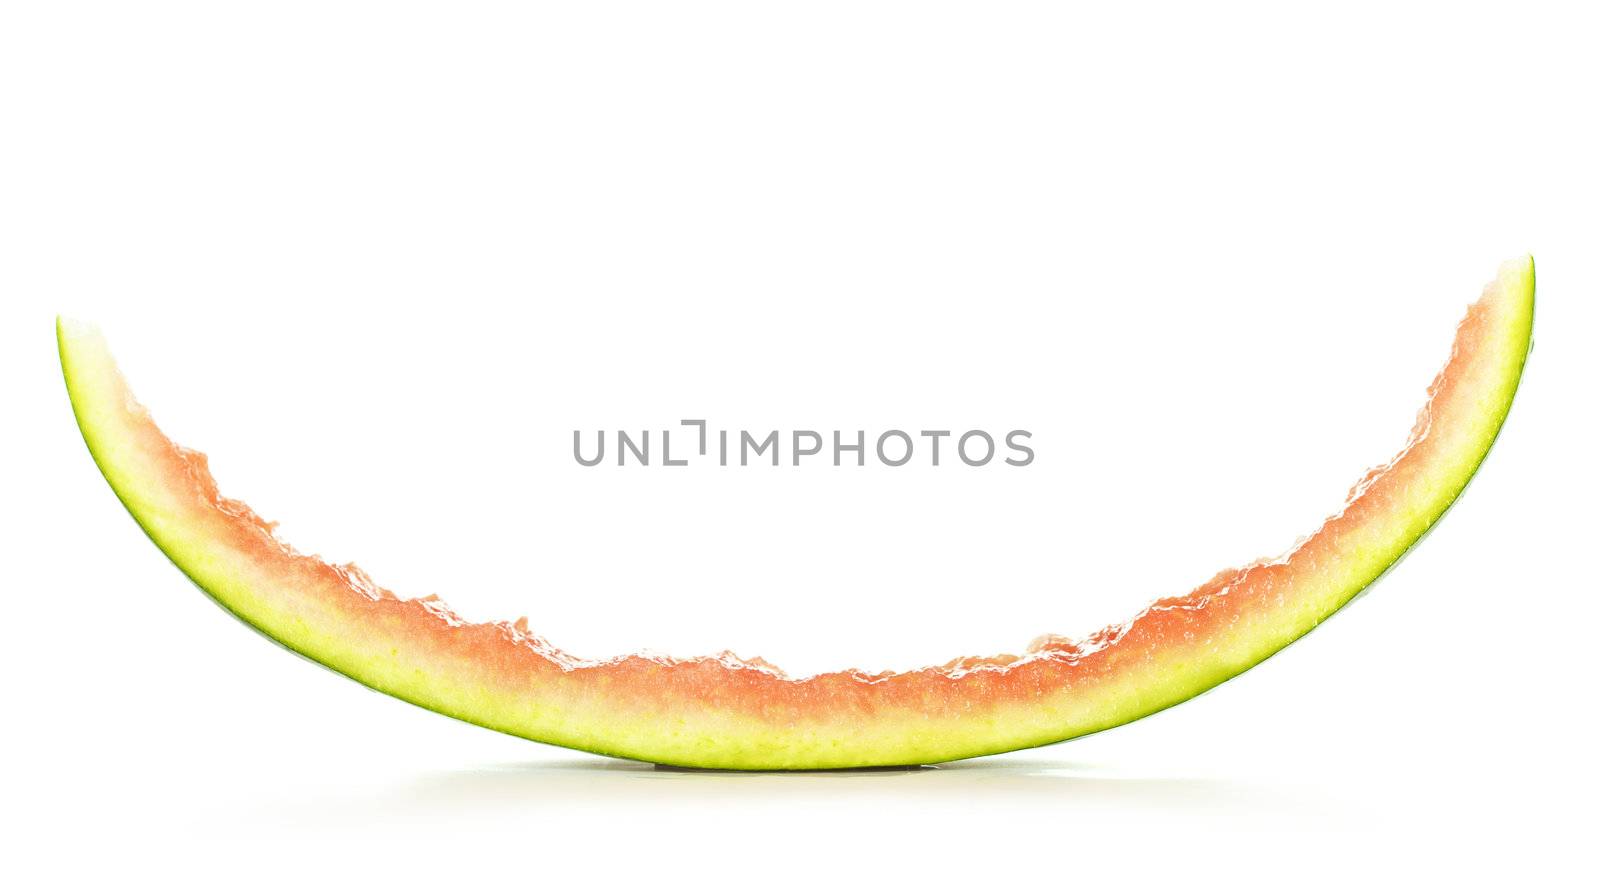 eaten slice of watermelon isolated on white